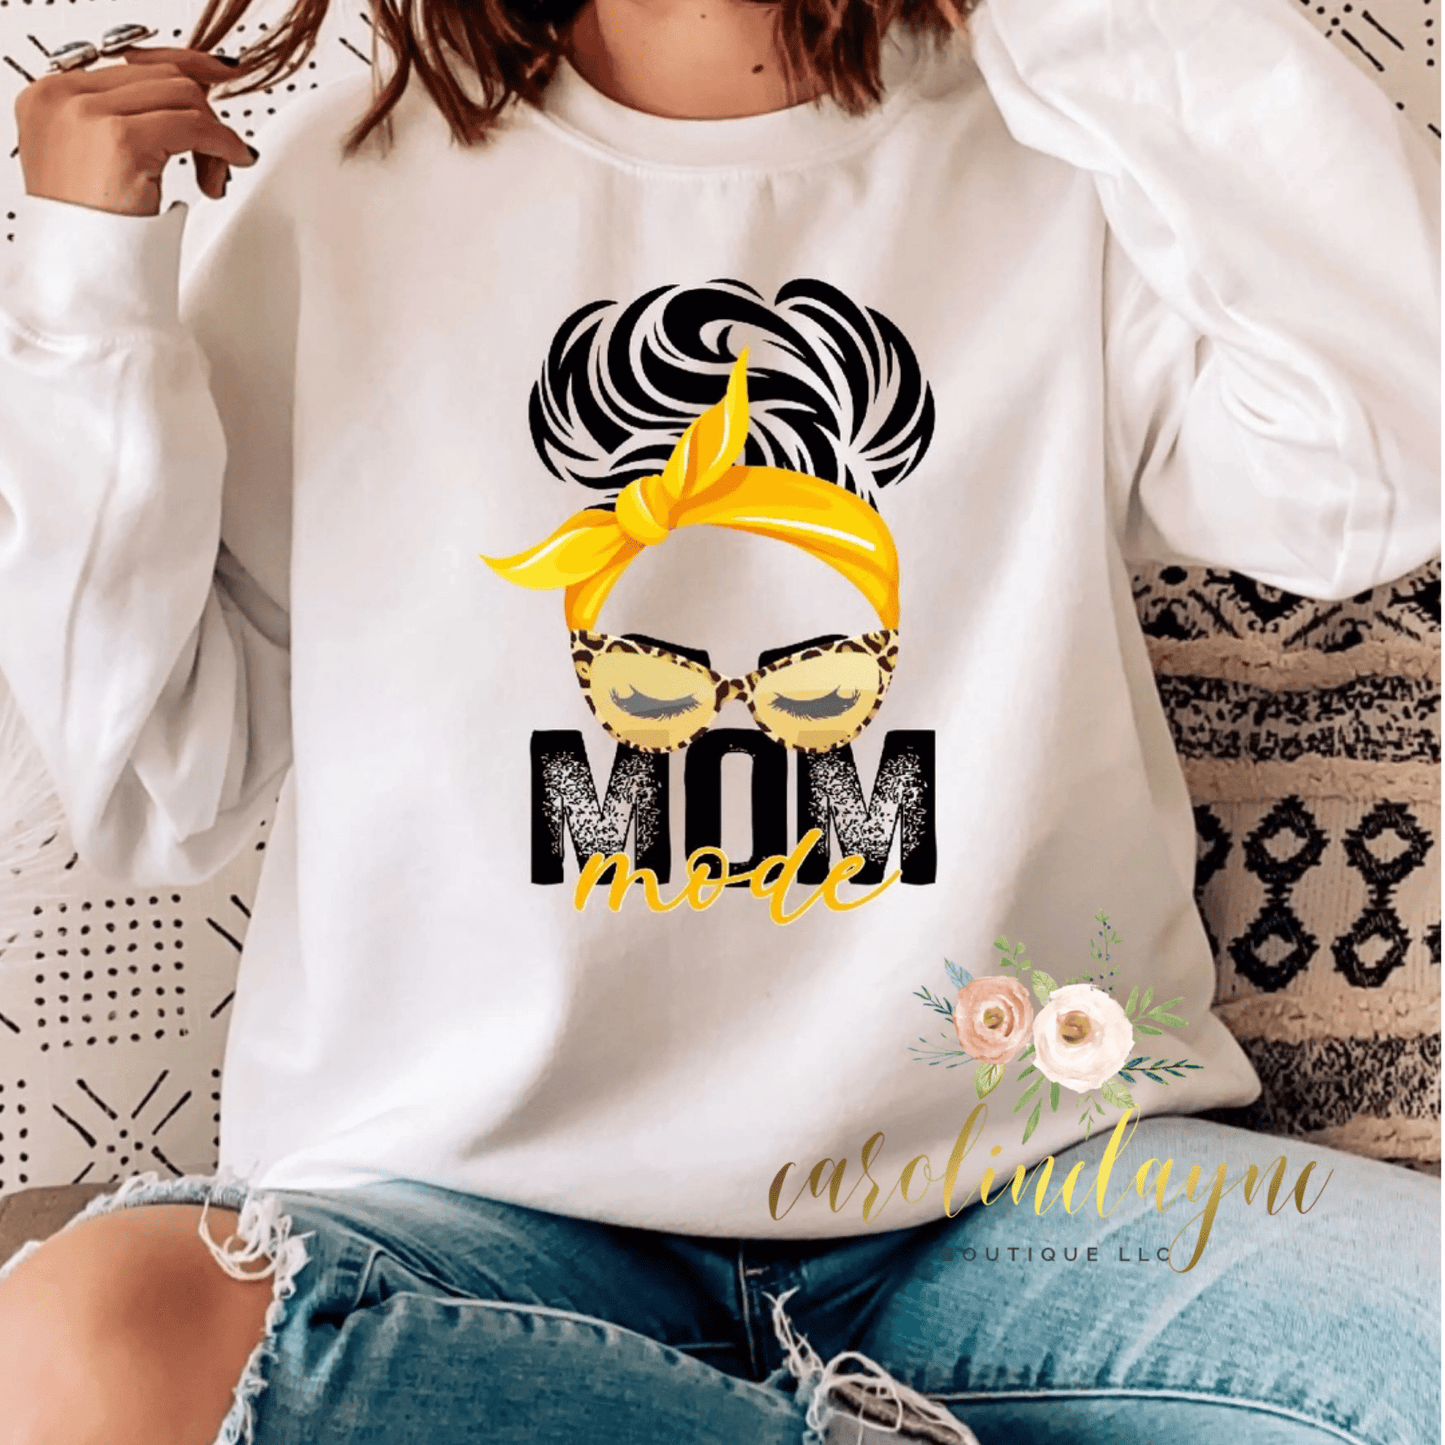 Mom mode Sweatshirt - Caroline Layne Boutique LLC